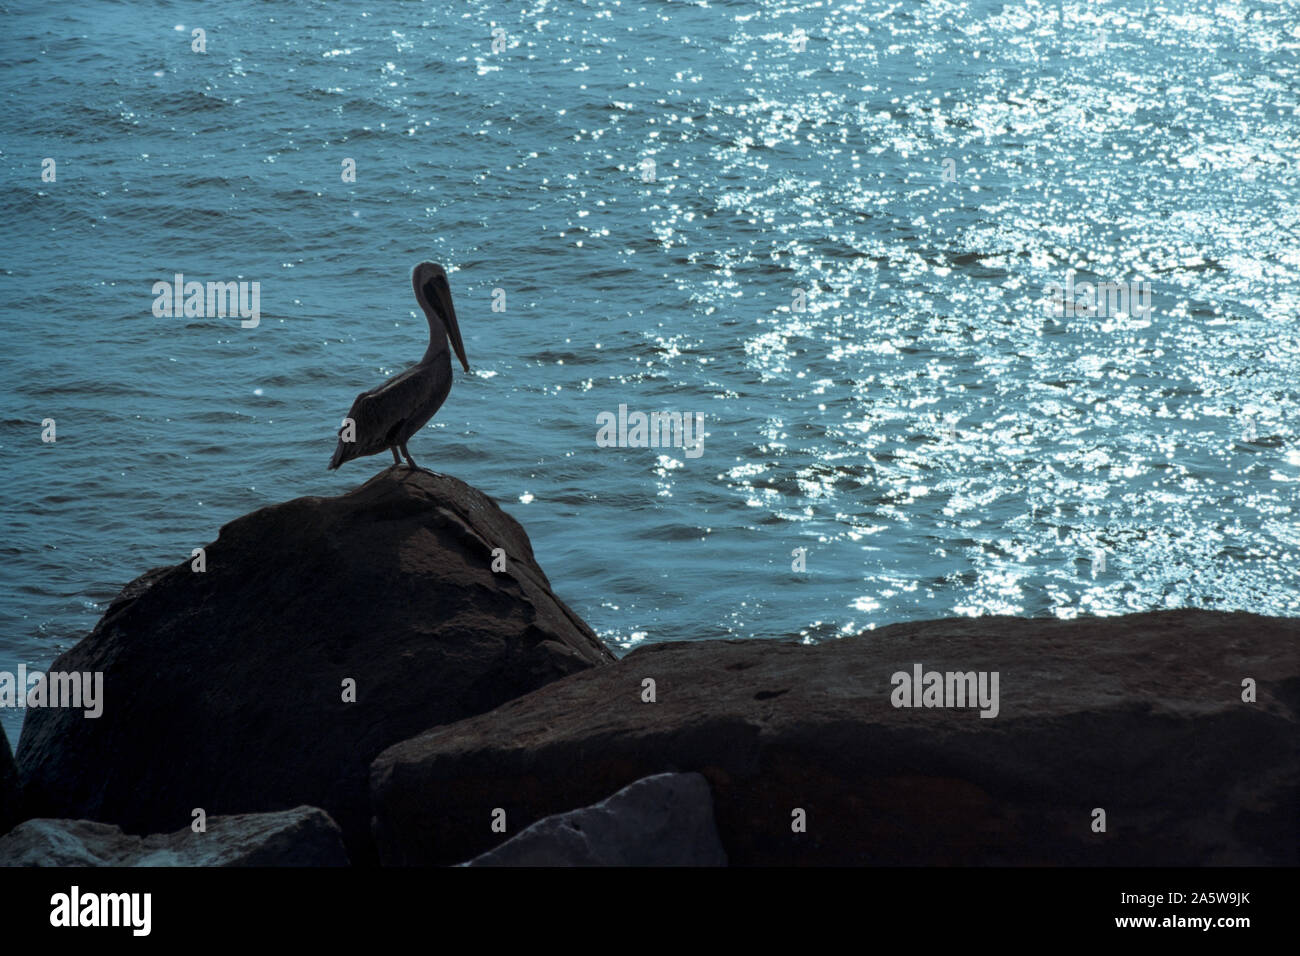 A brow pelican on the breakwater rocks of Coatzacoalcos river, Veracruz, Mexico. Film capture. Stock Photo